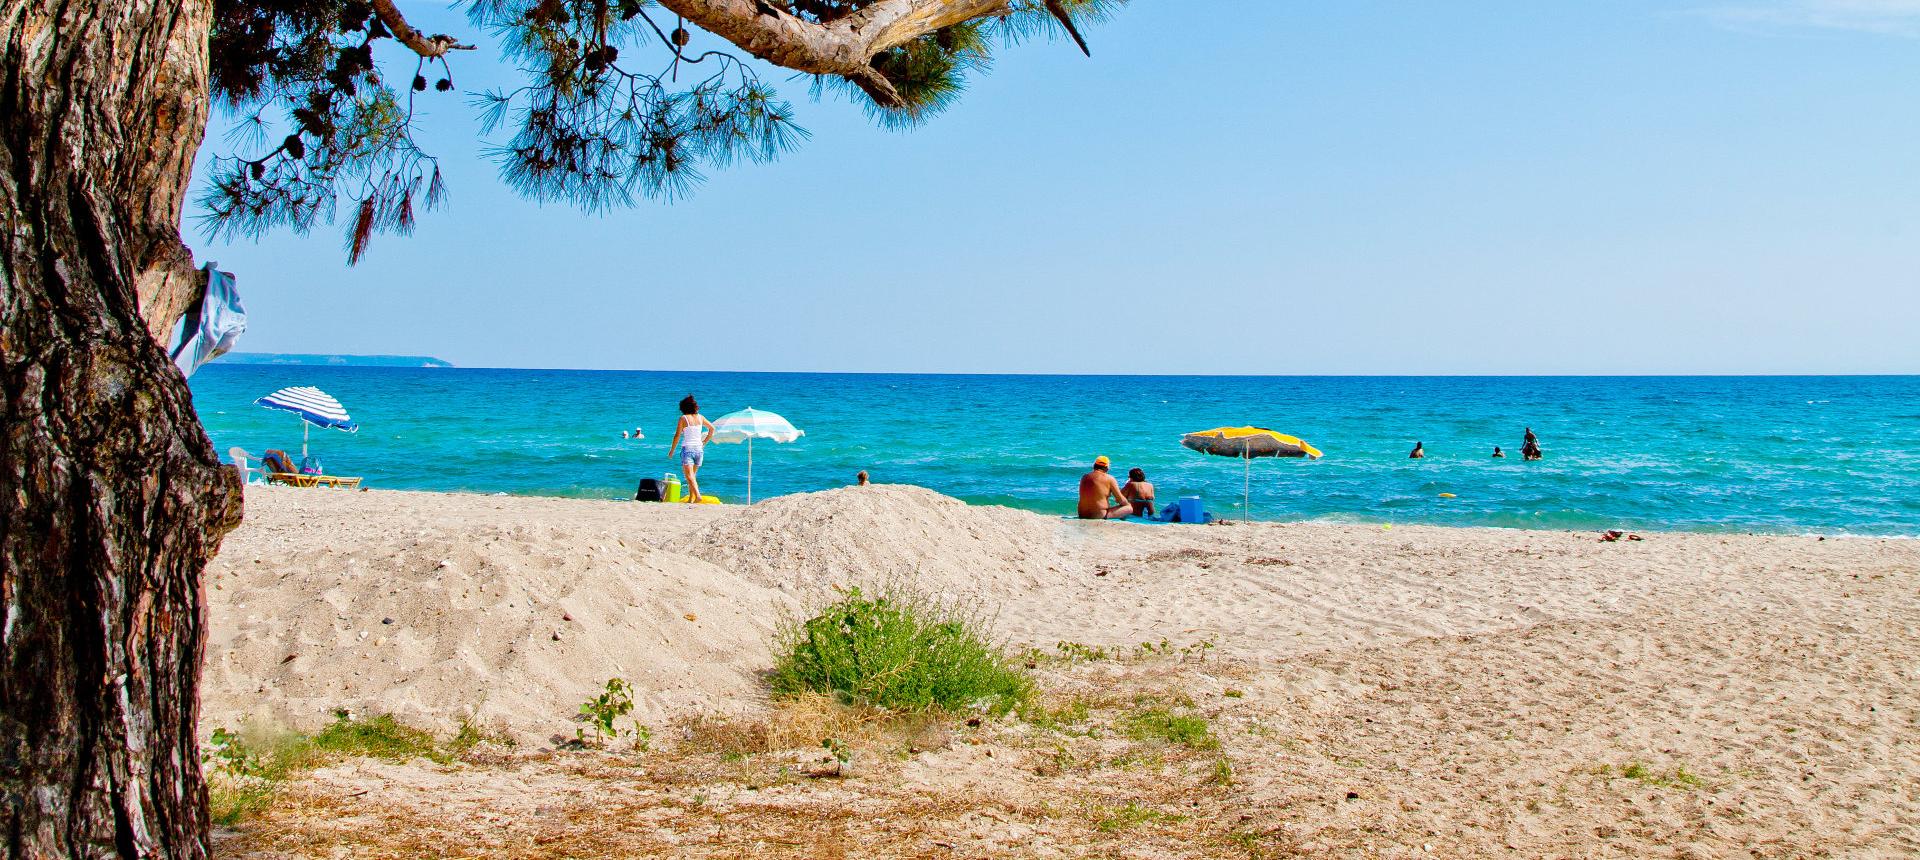 Halkidiki - Dionysiou beach